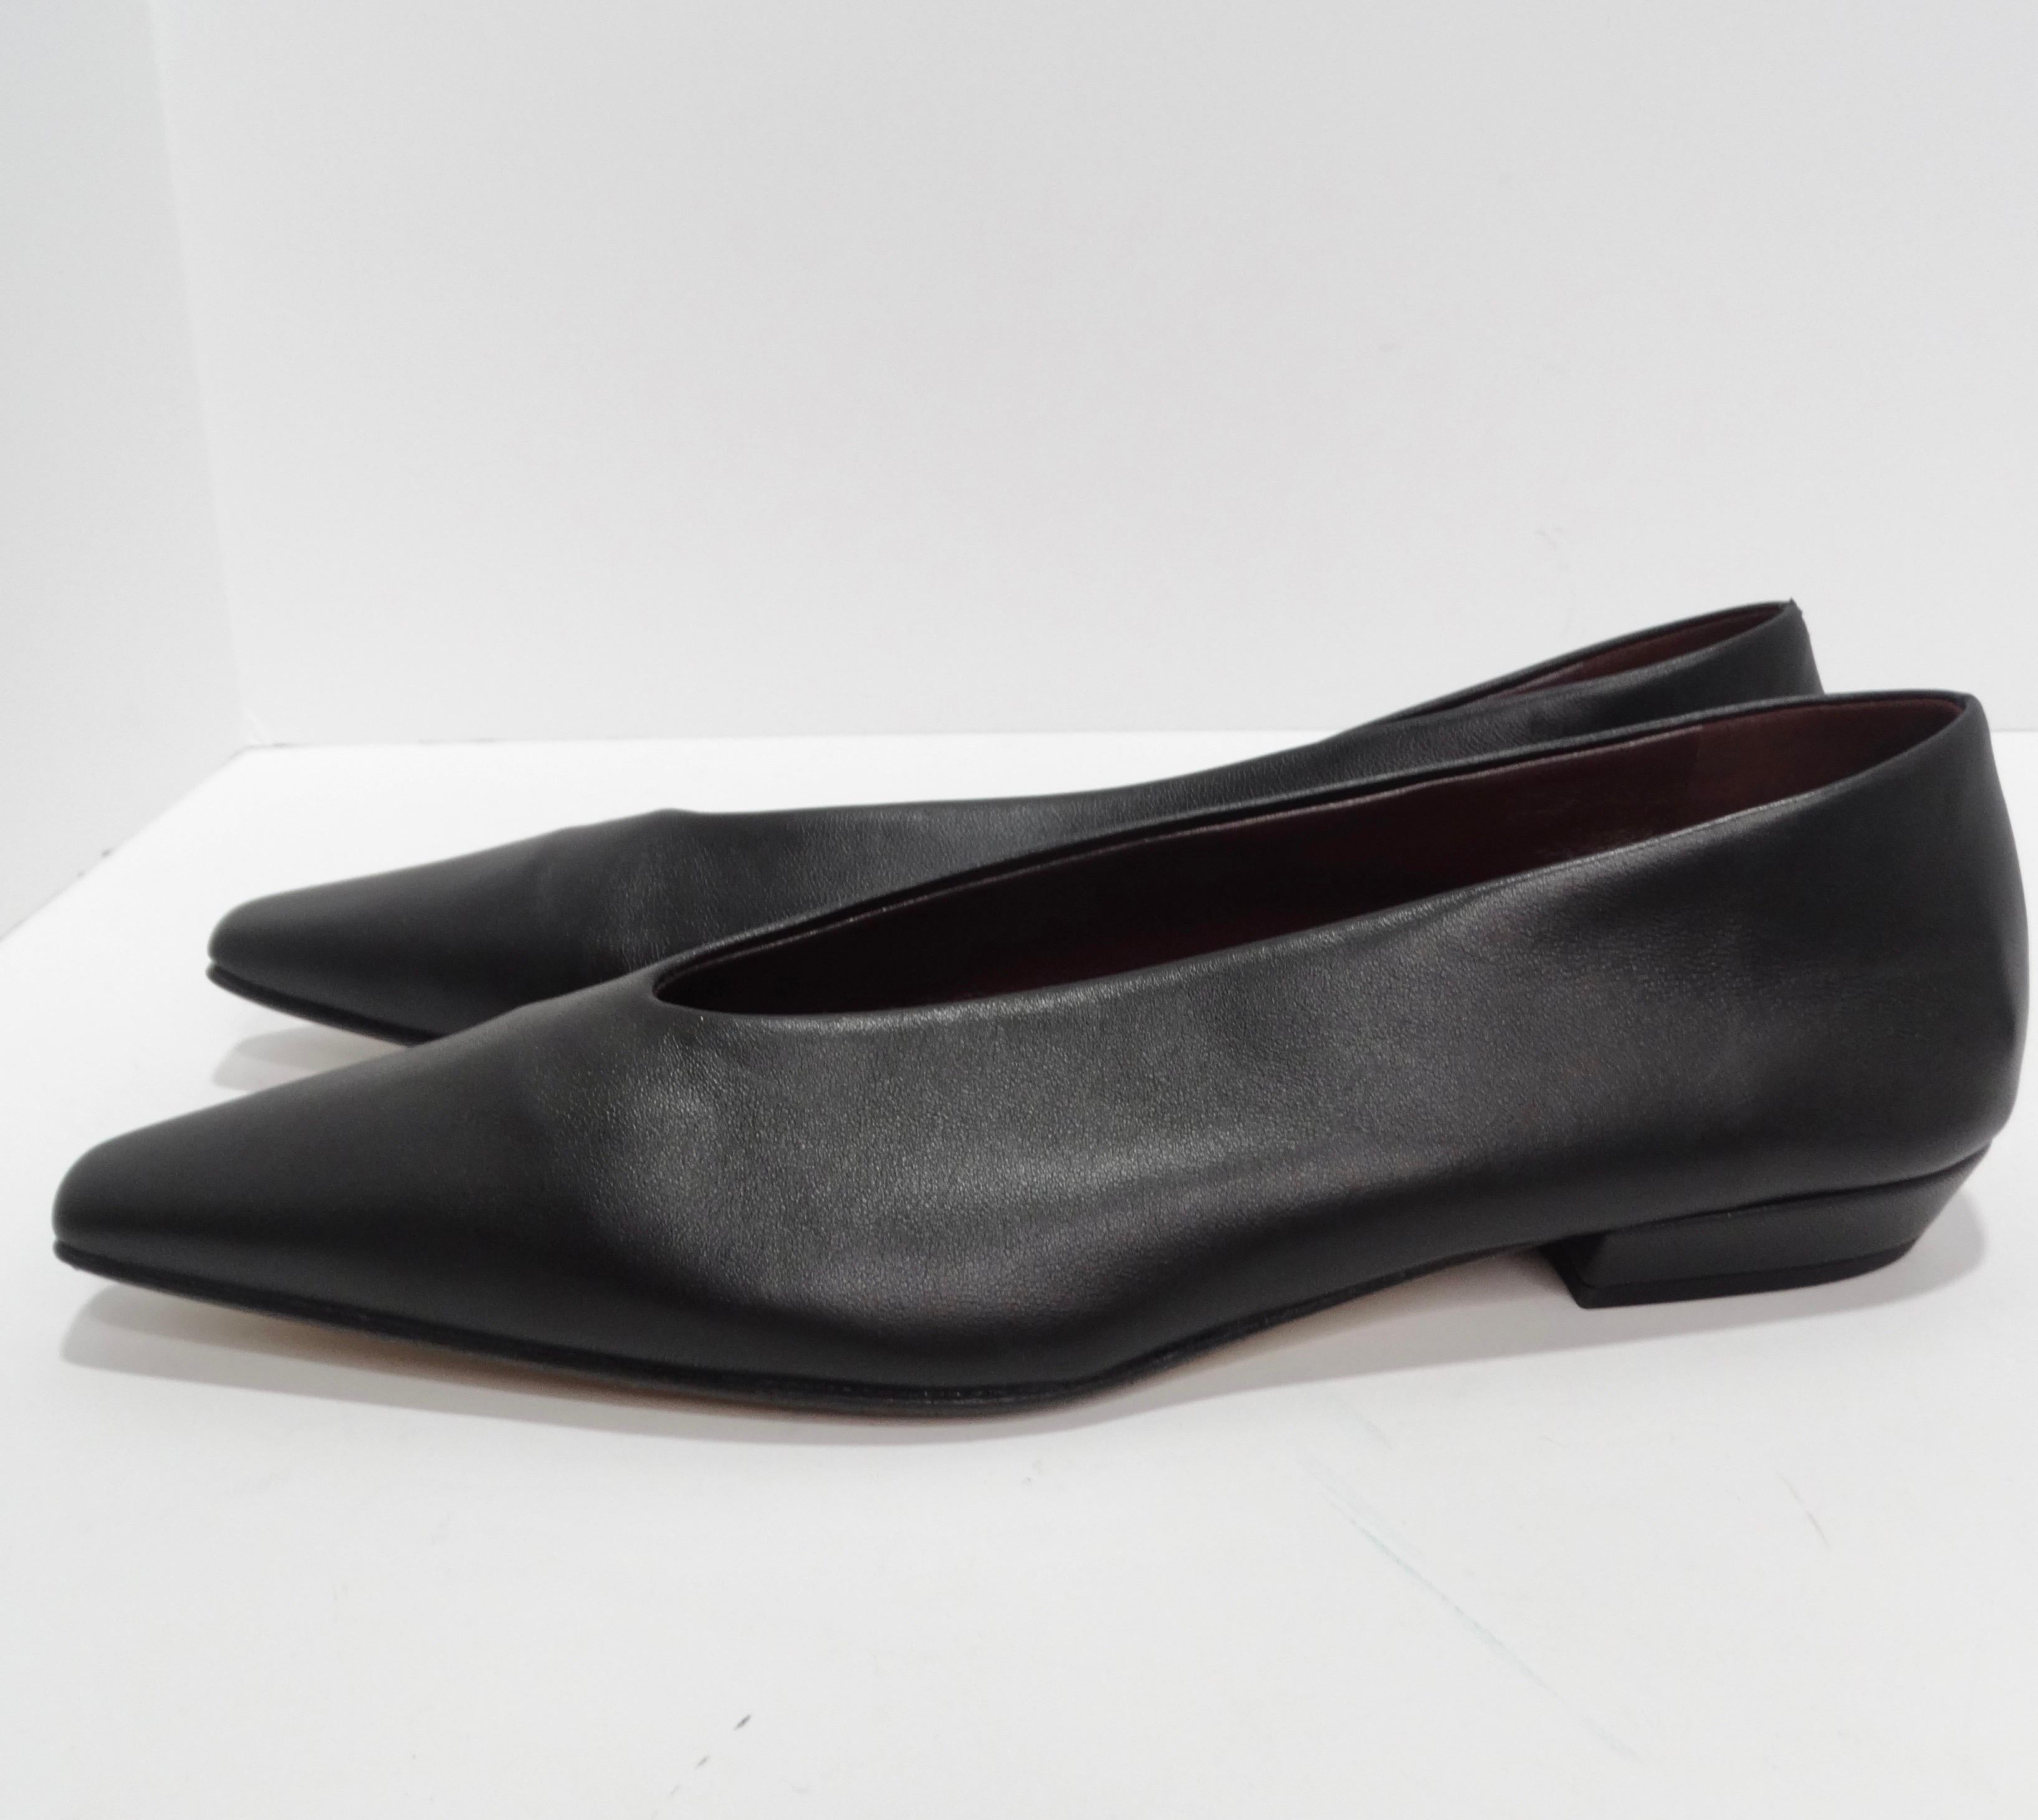 Bottega Veneta Almond Black Leather Flats In Good Condition For Sale In Scottsdale, AZ